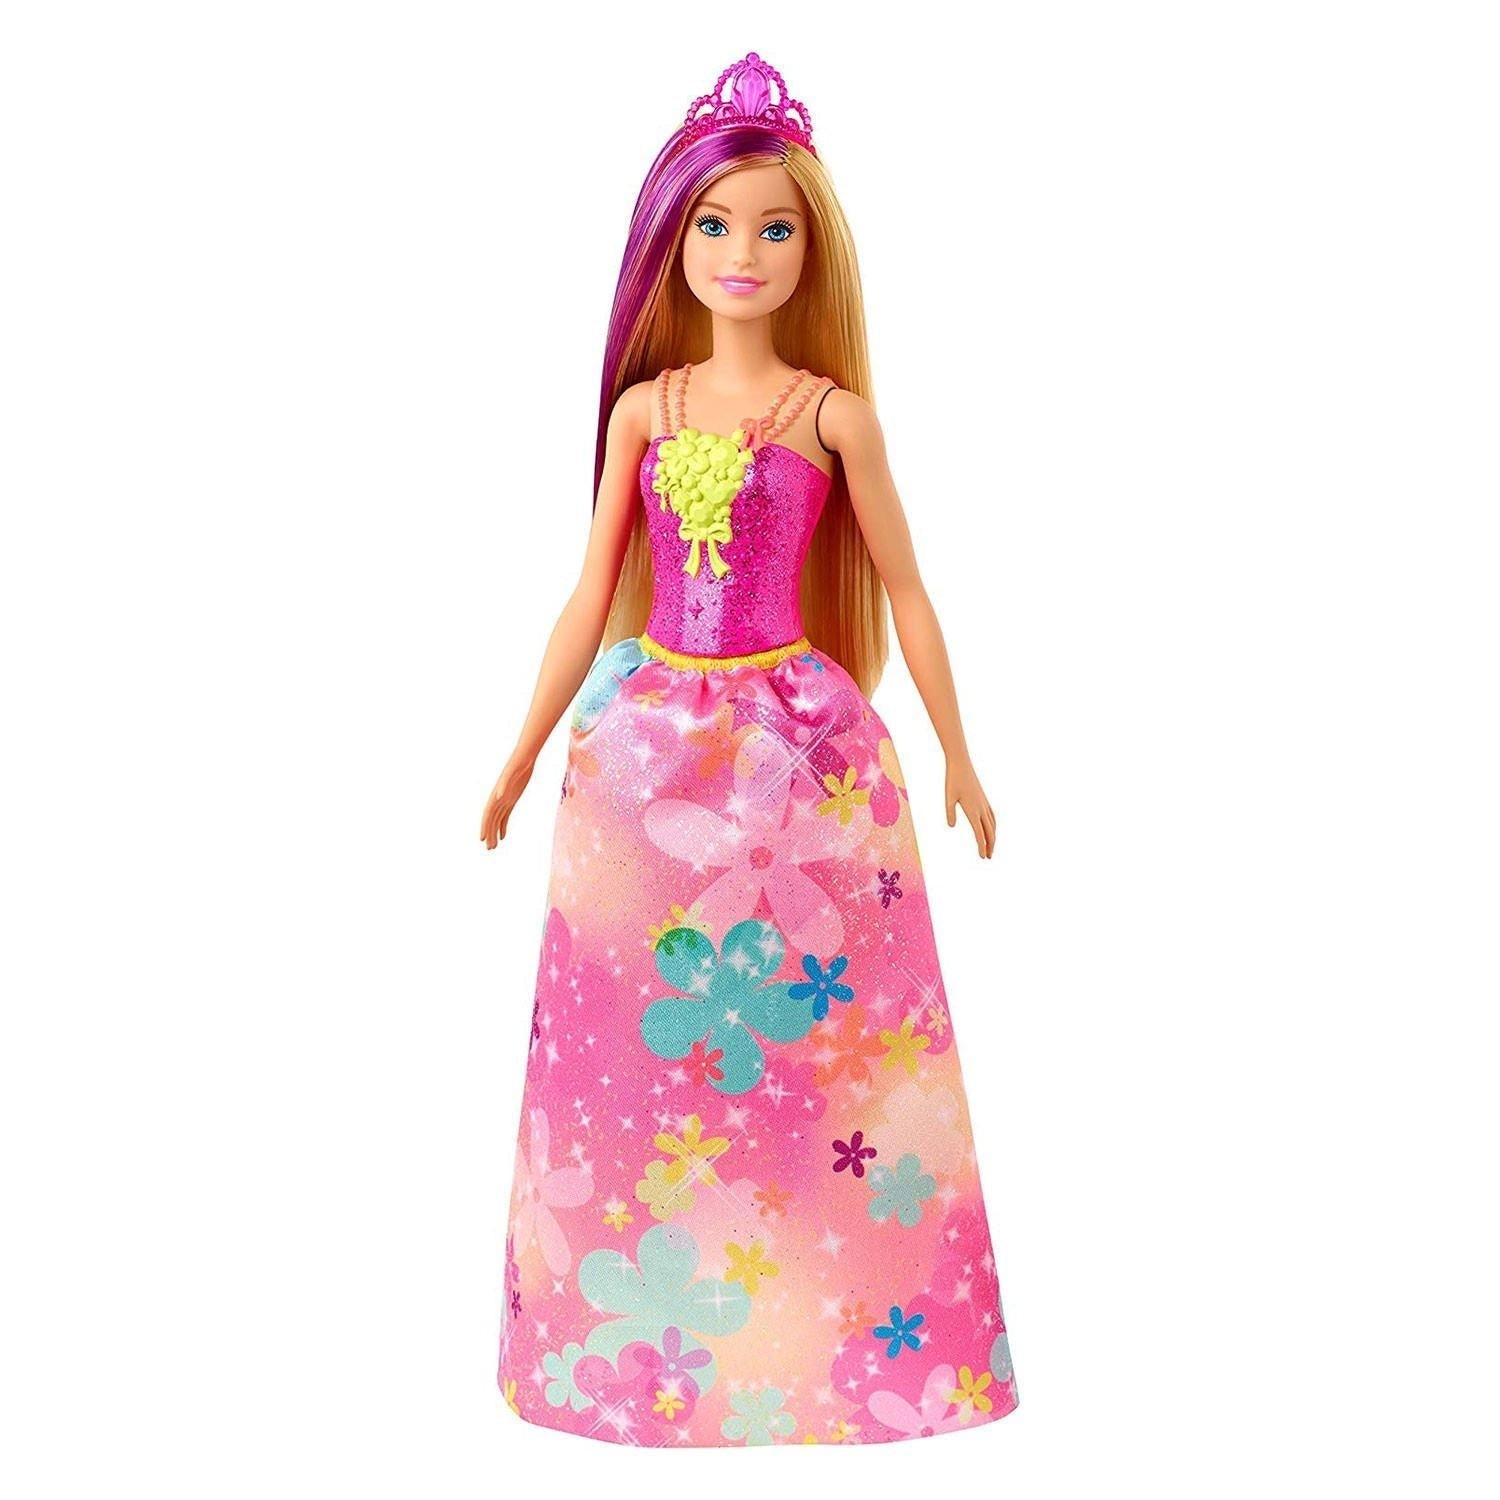 Barbie Dreamtopia Princess Blonde and Purple Hair Doll